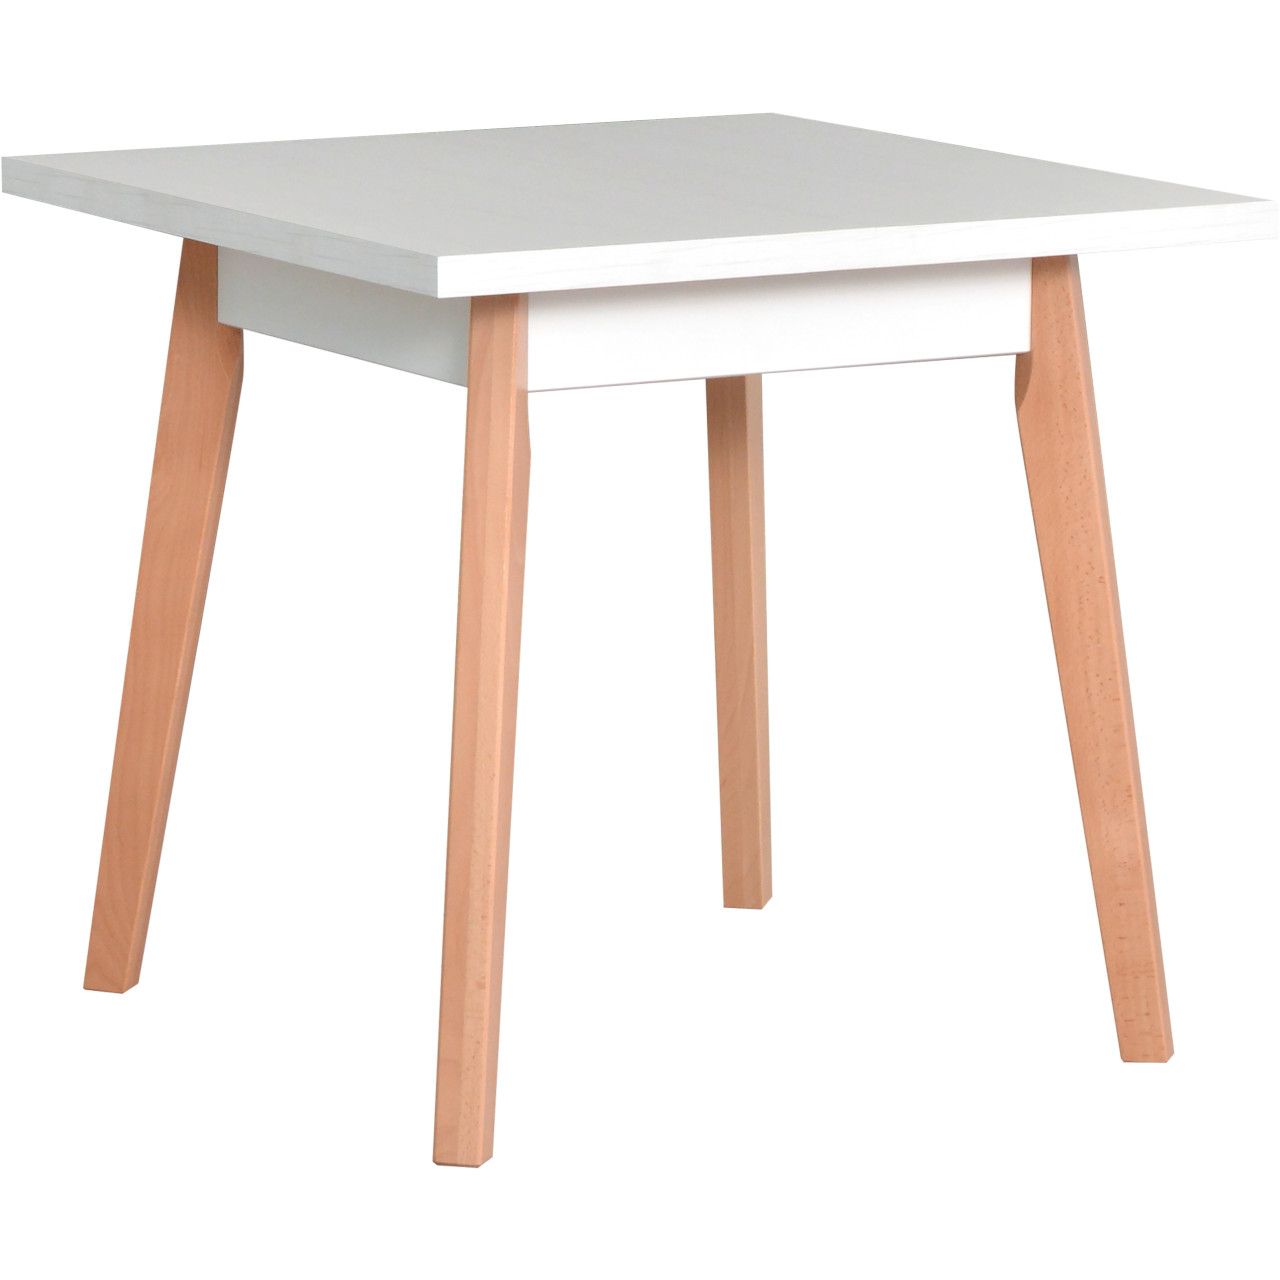 Table OSLO 1 80x80 white laminate / natural beech